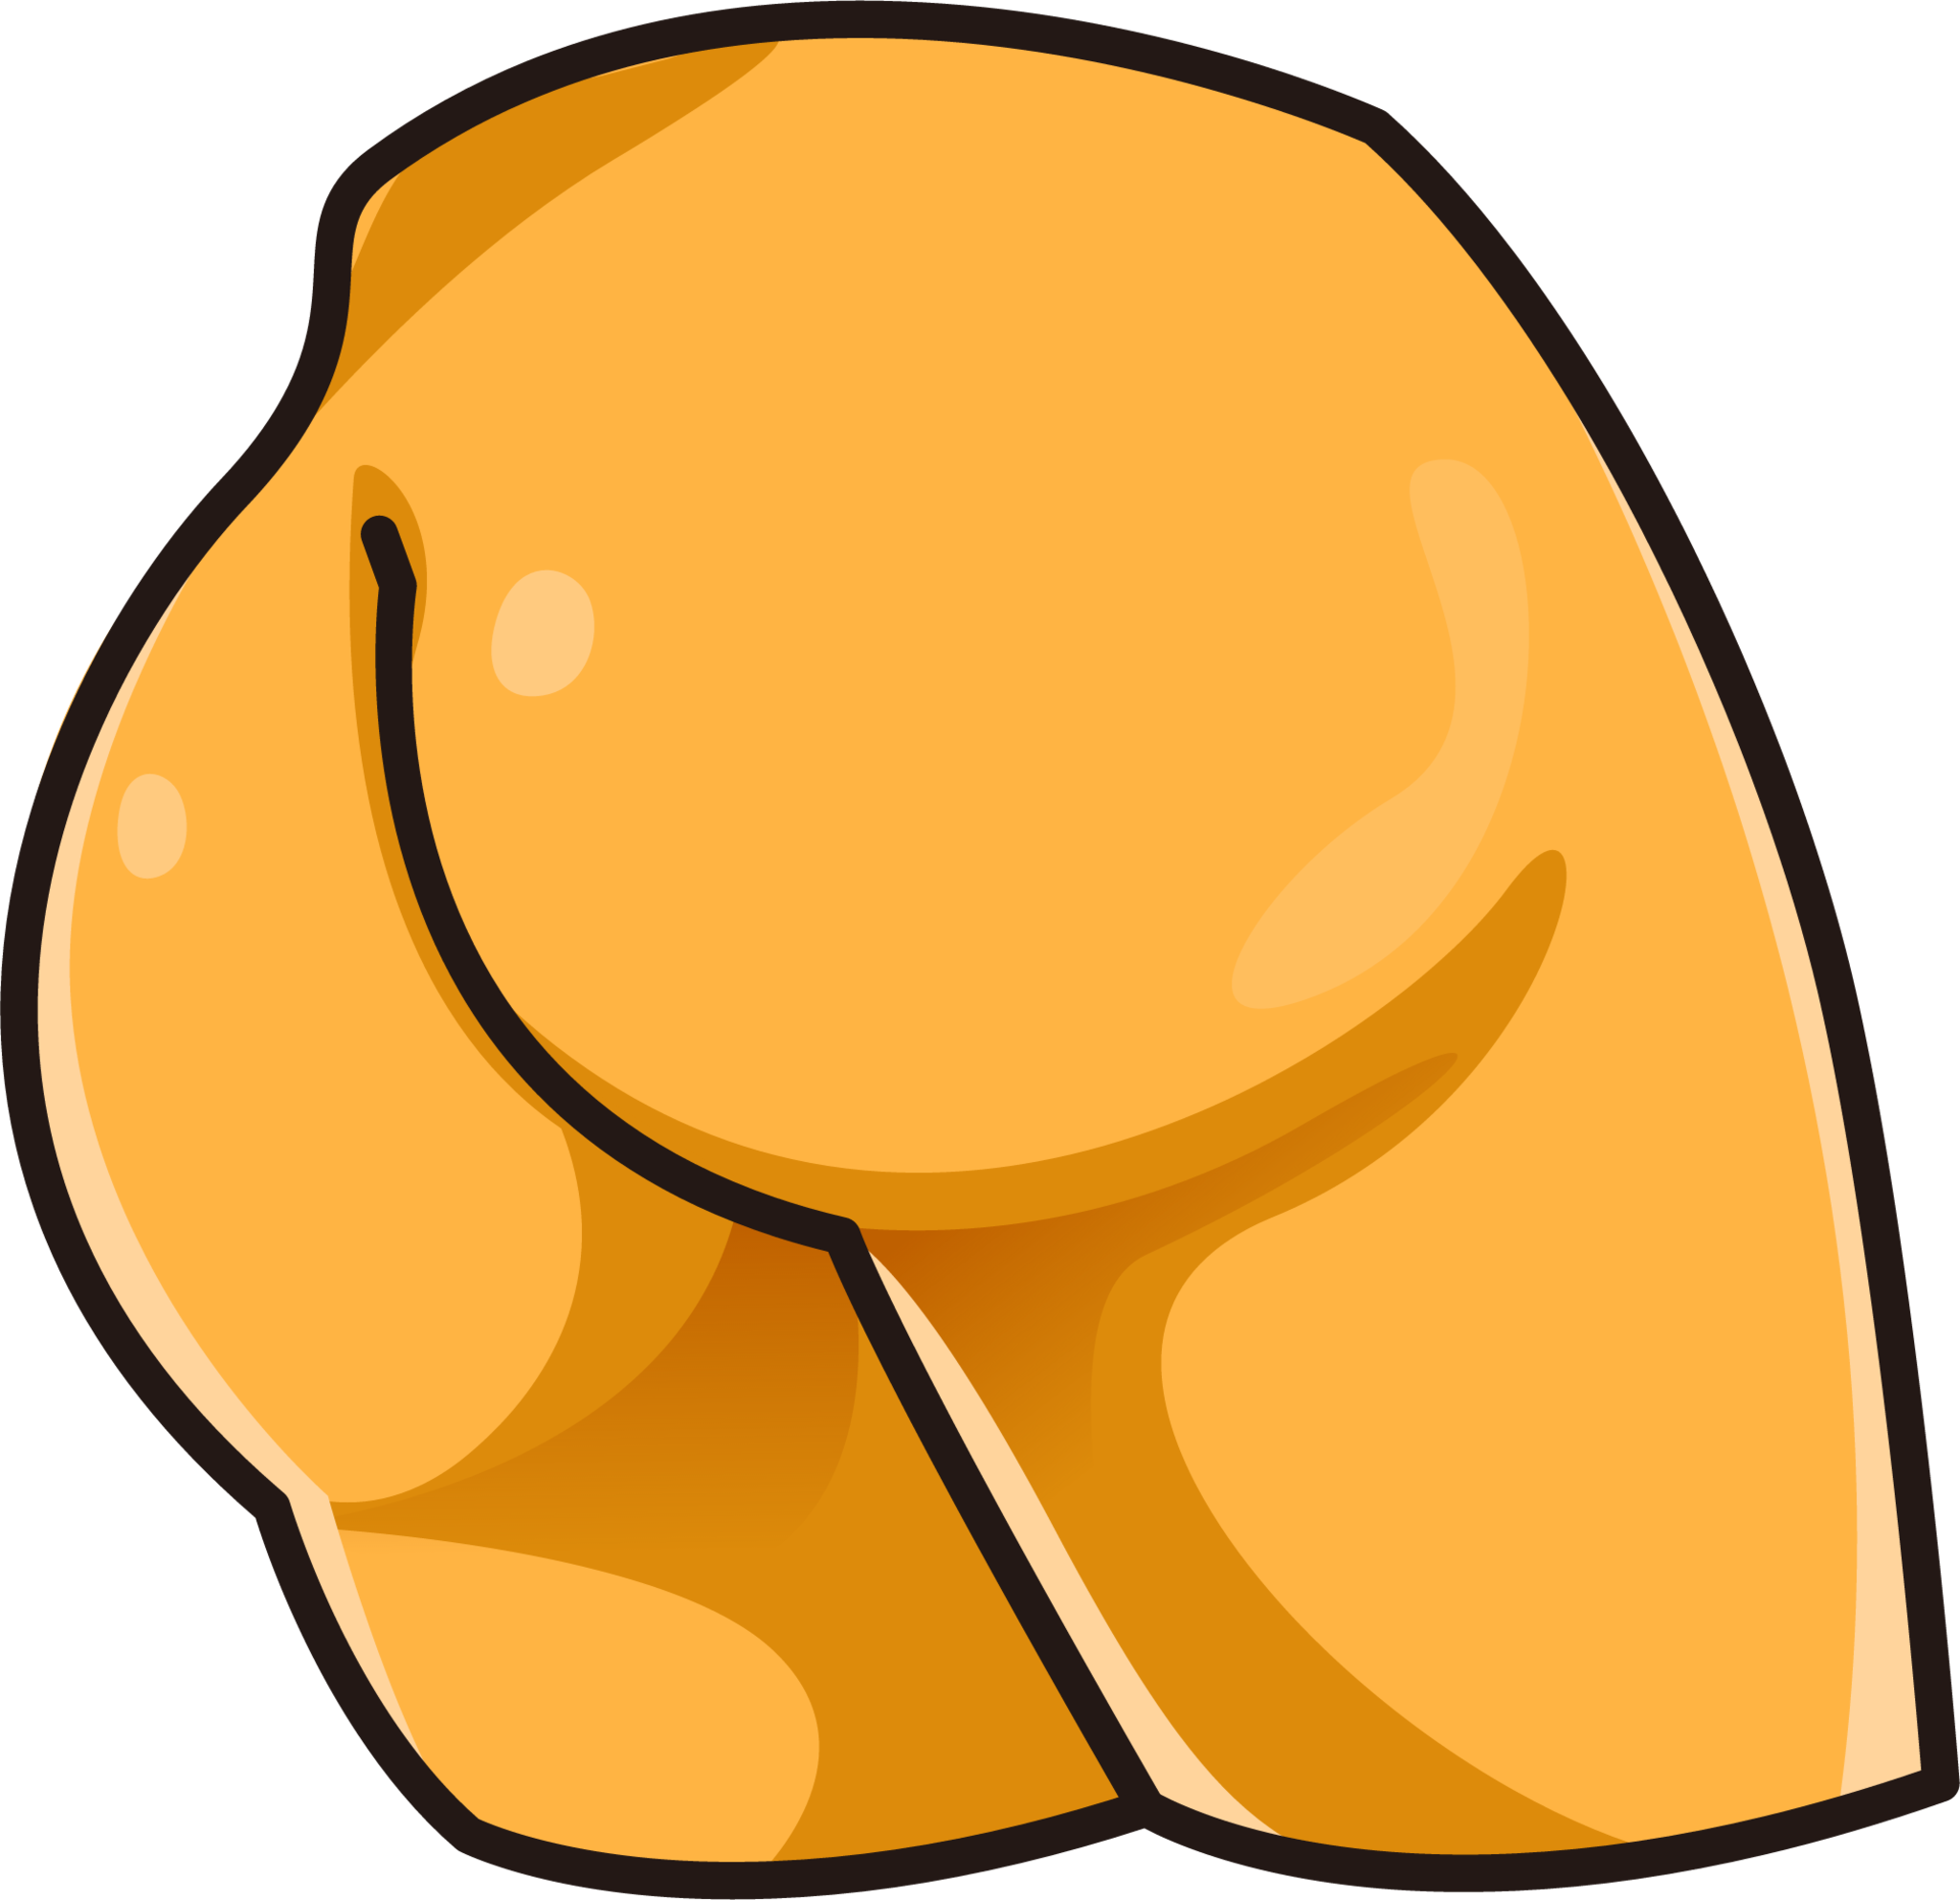 Big booty emoji